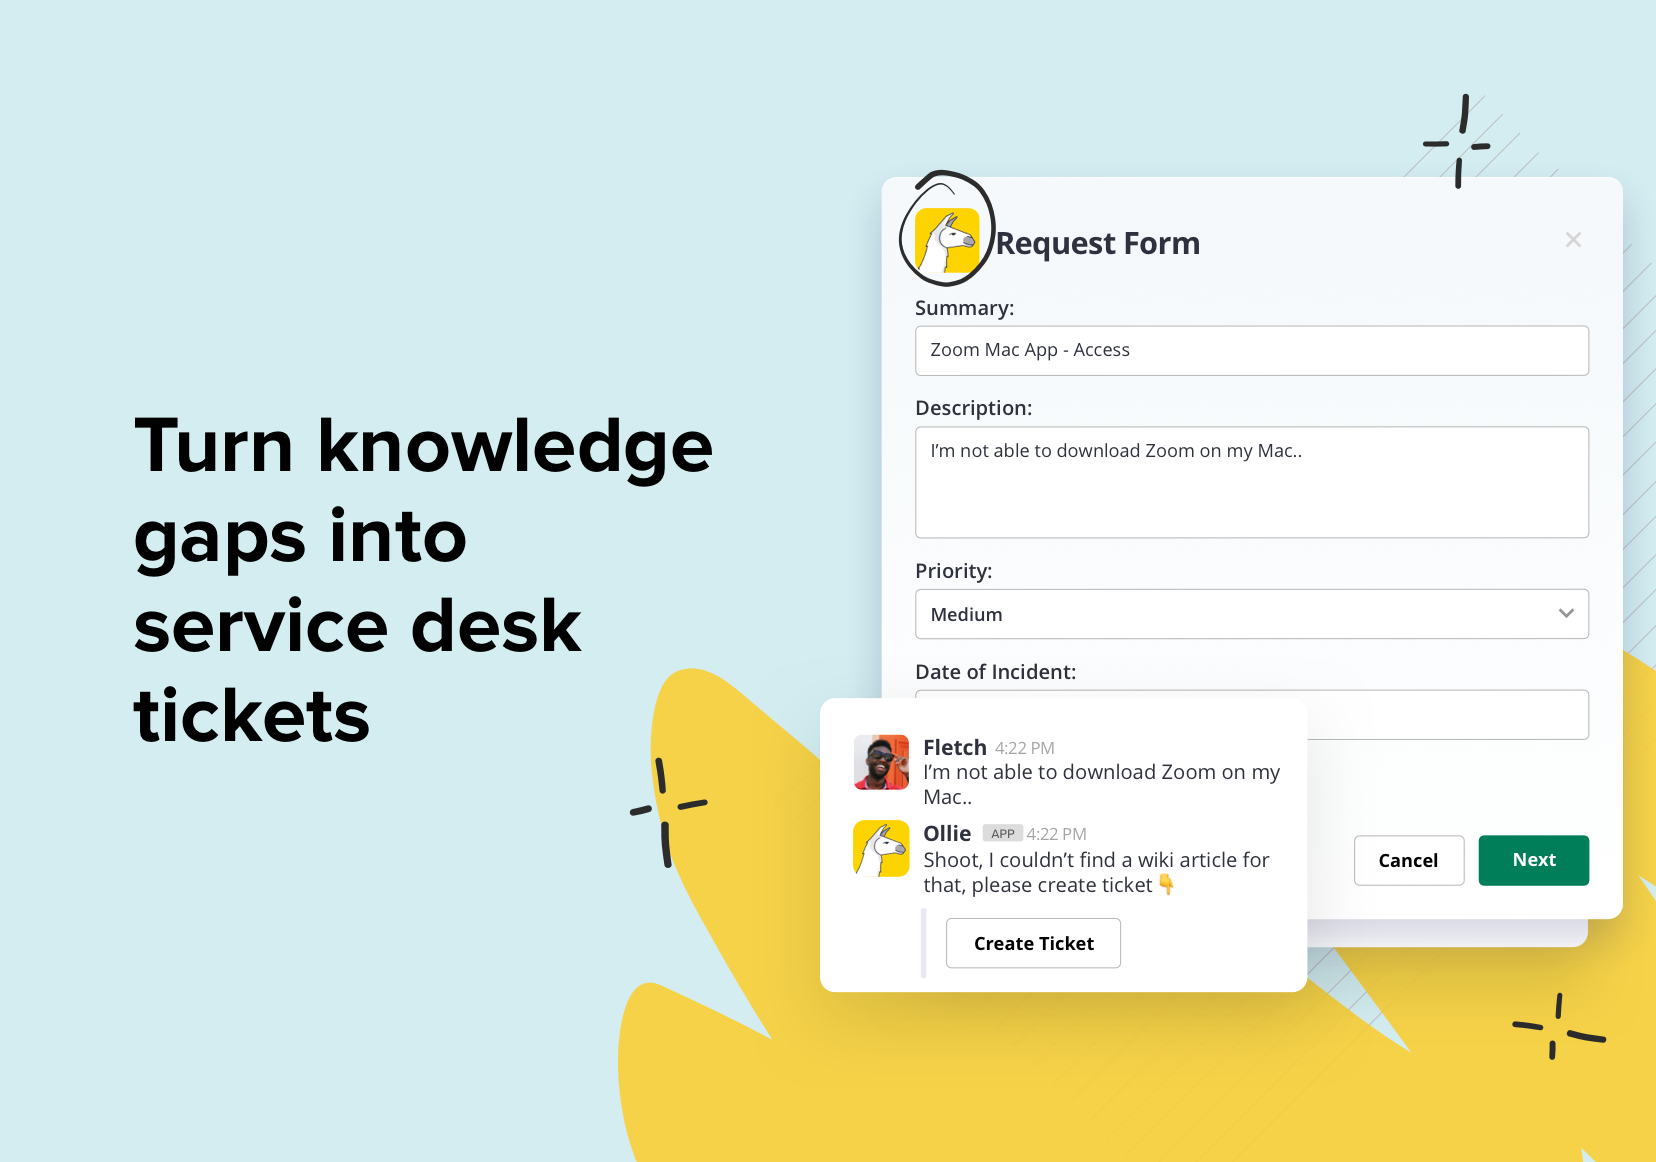 Turn knowledge gaps into service desk tickets.